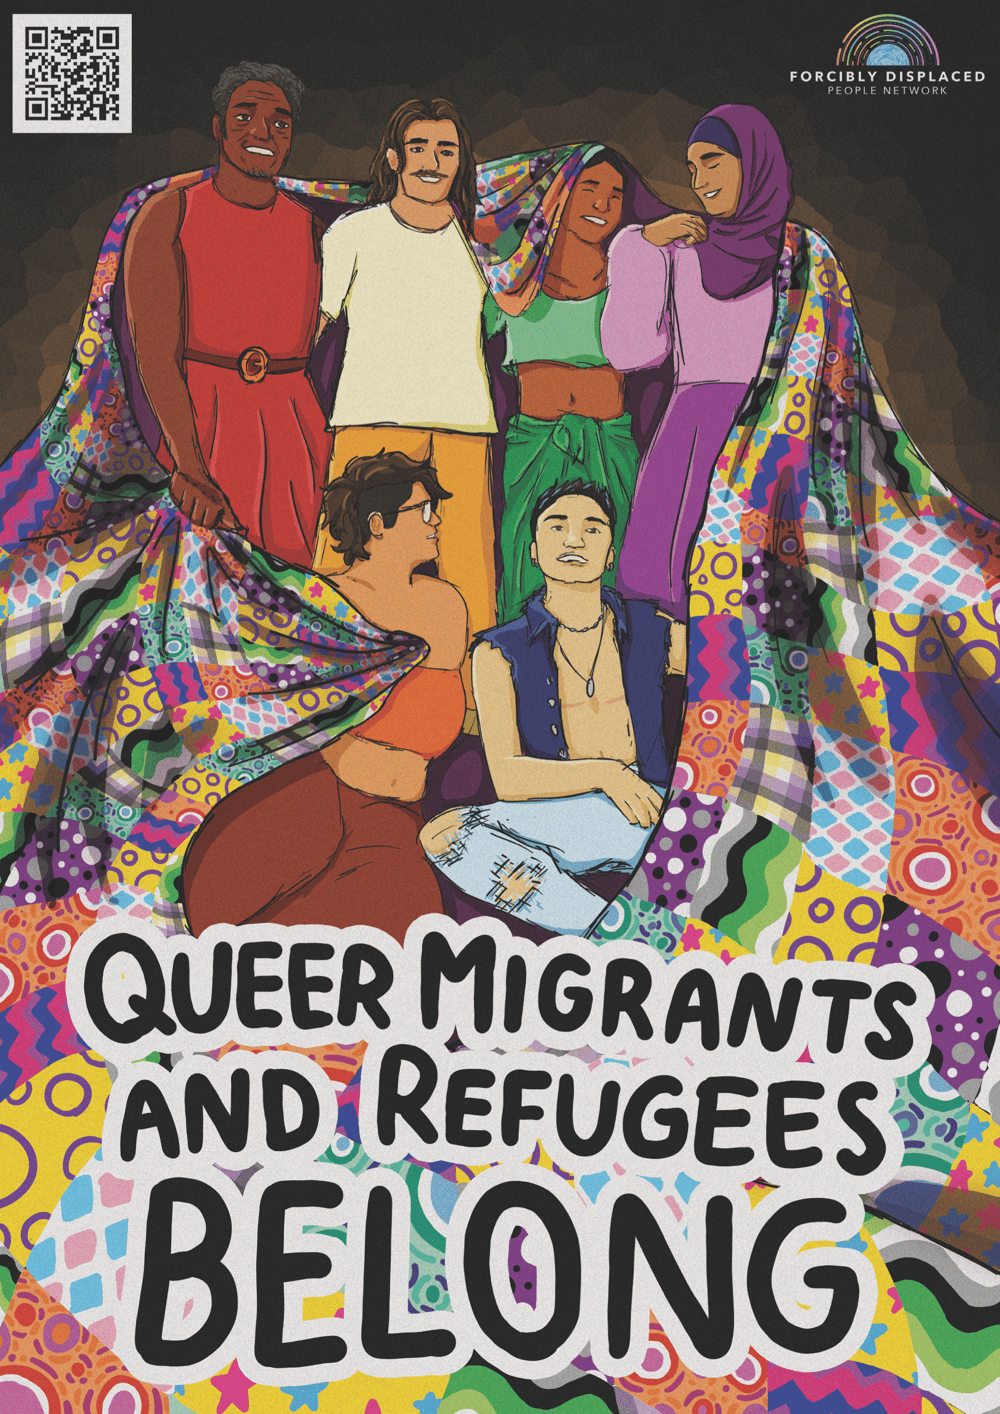 Image of 'LGBTIQ+ migrants and refugees belong' poster 